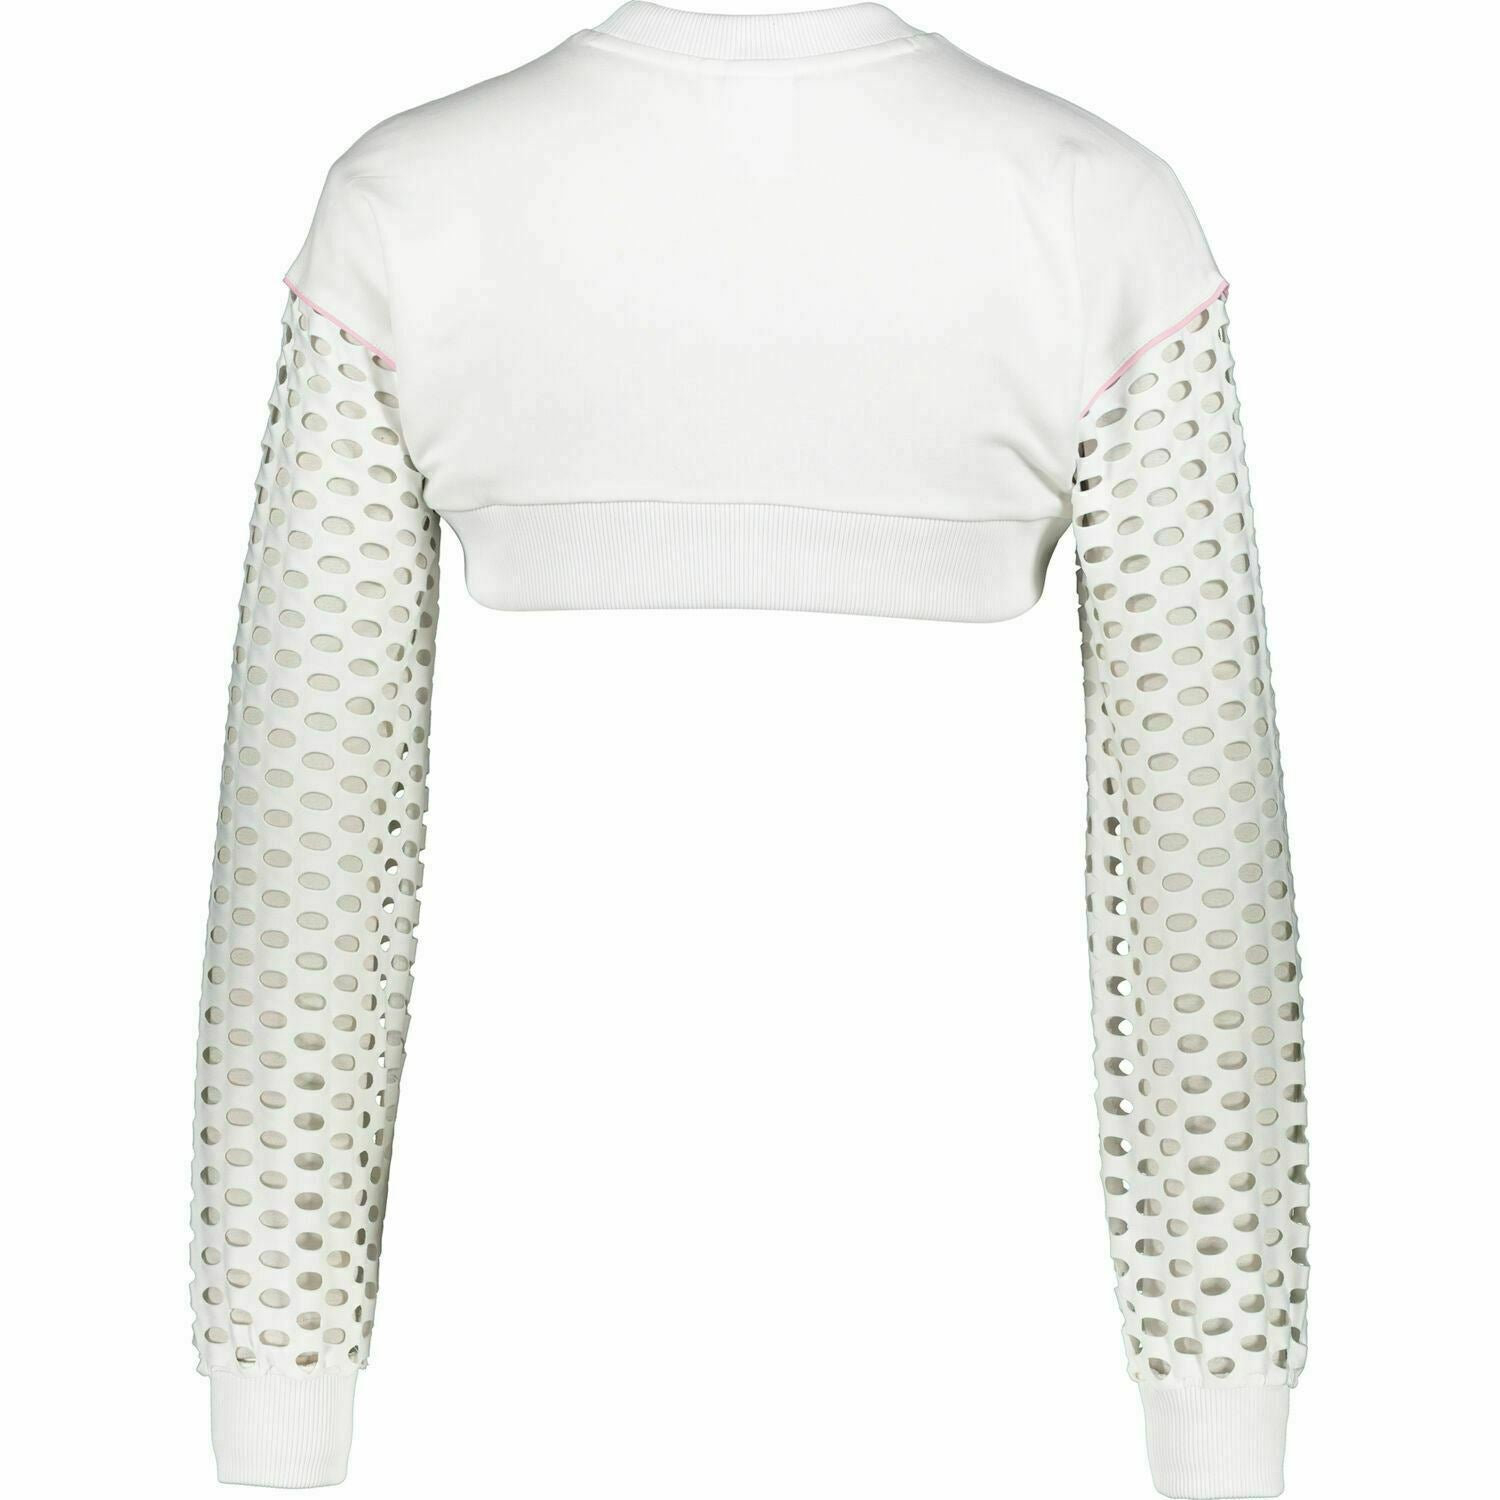 PUMA x SOPHIA WEBSTER Women's White Extreme Crop Sweatshirt Top, size XS